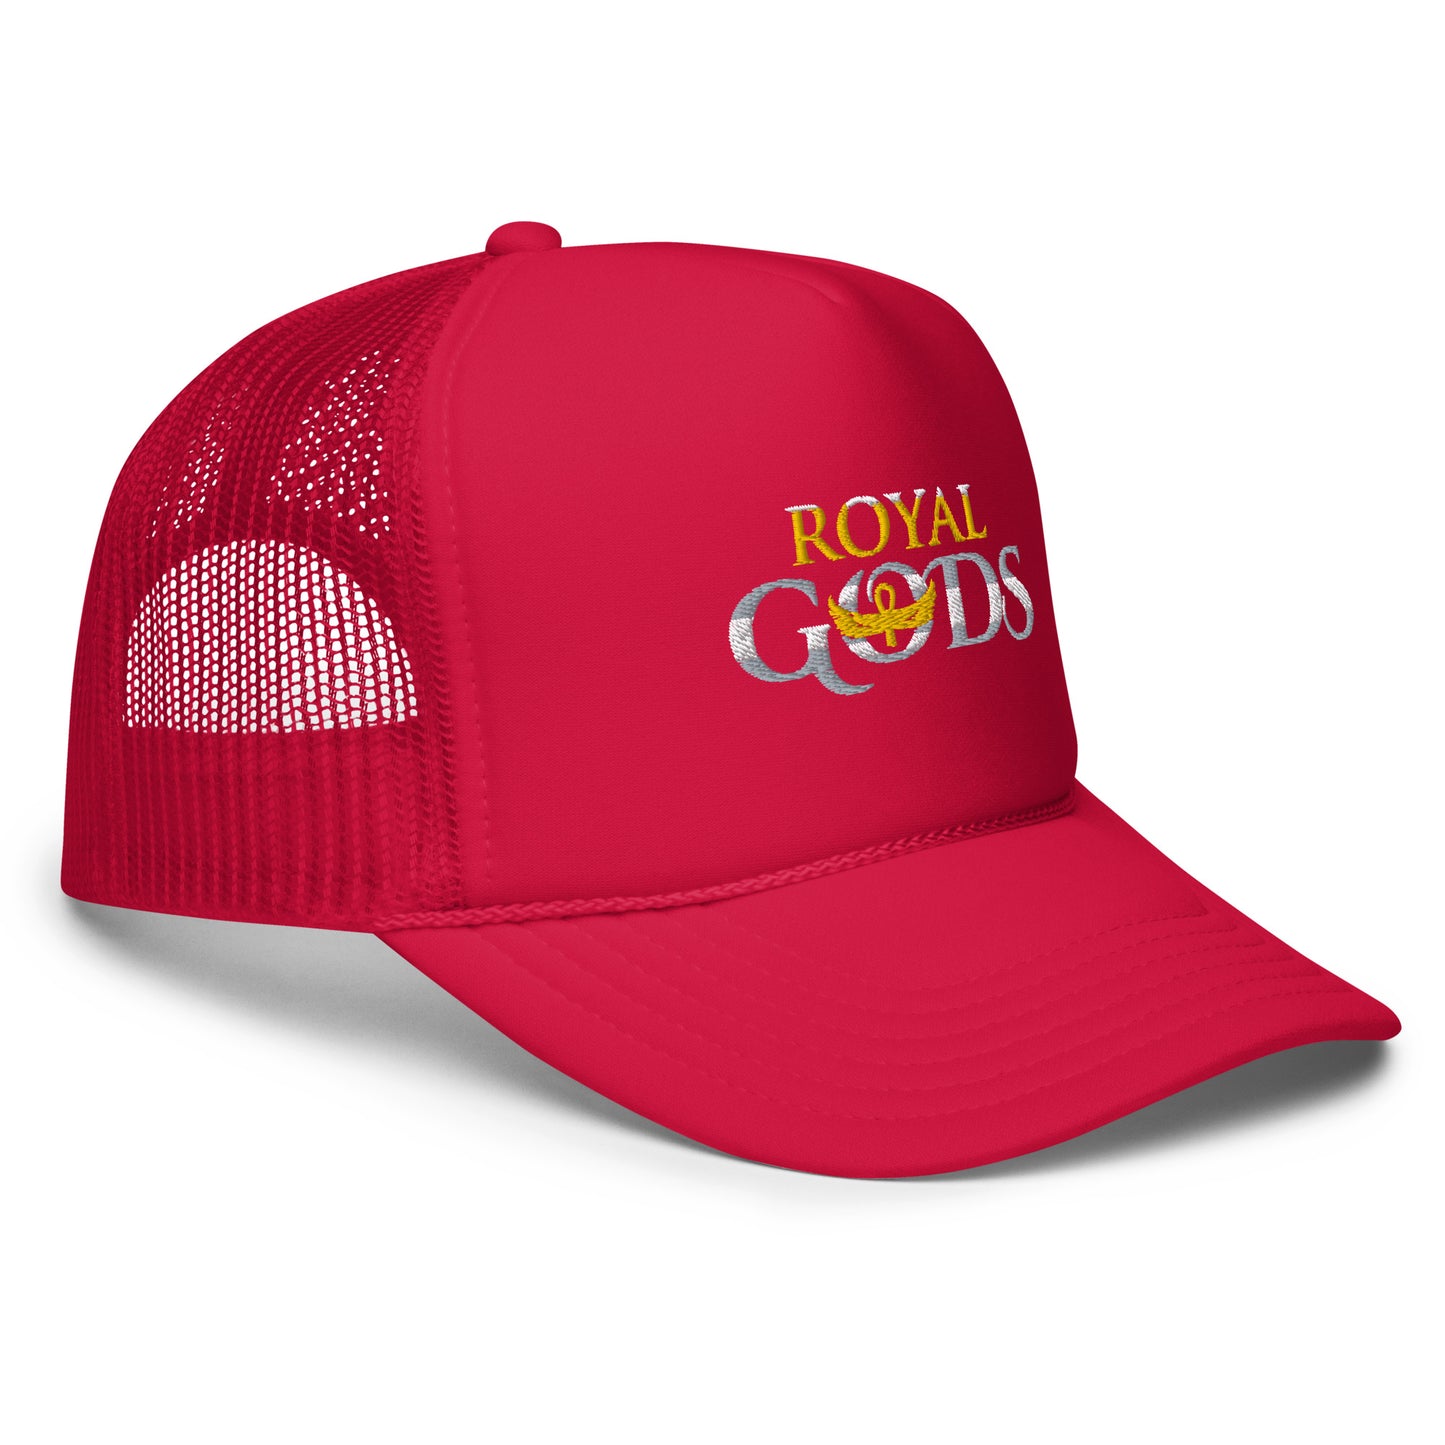 Royal Gods Trucker Hat